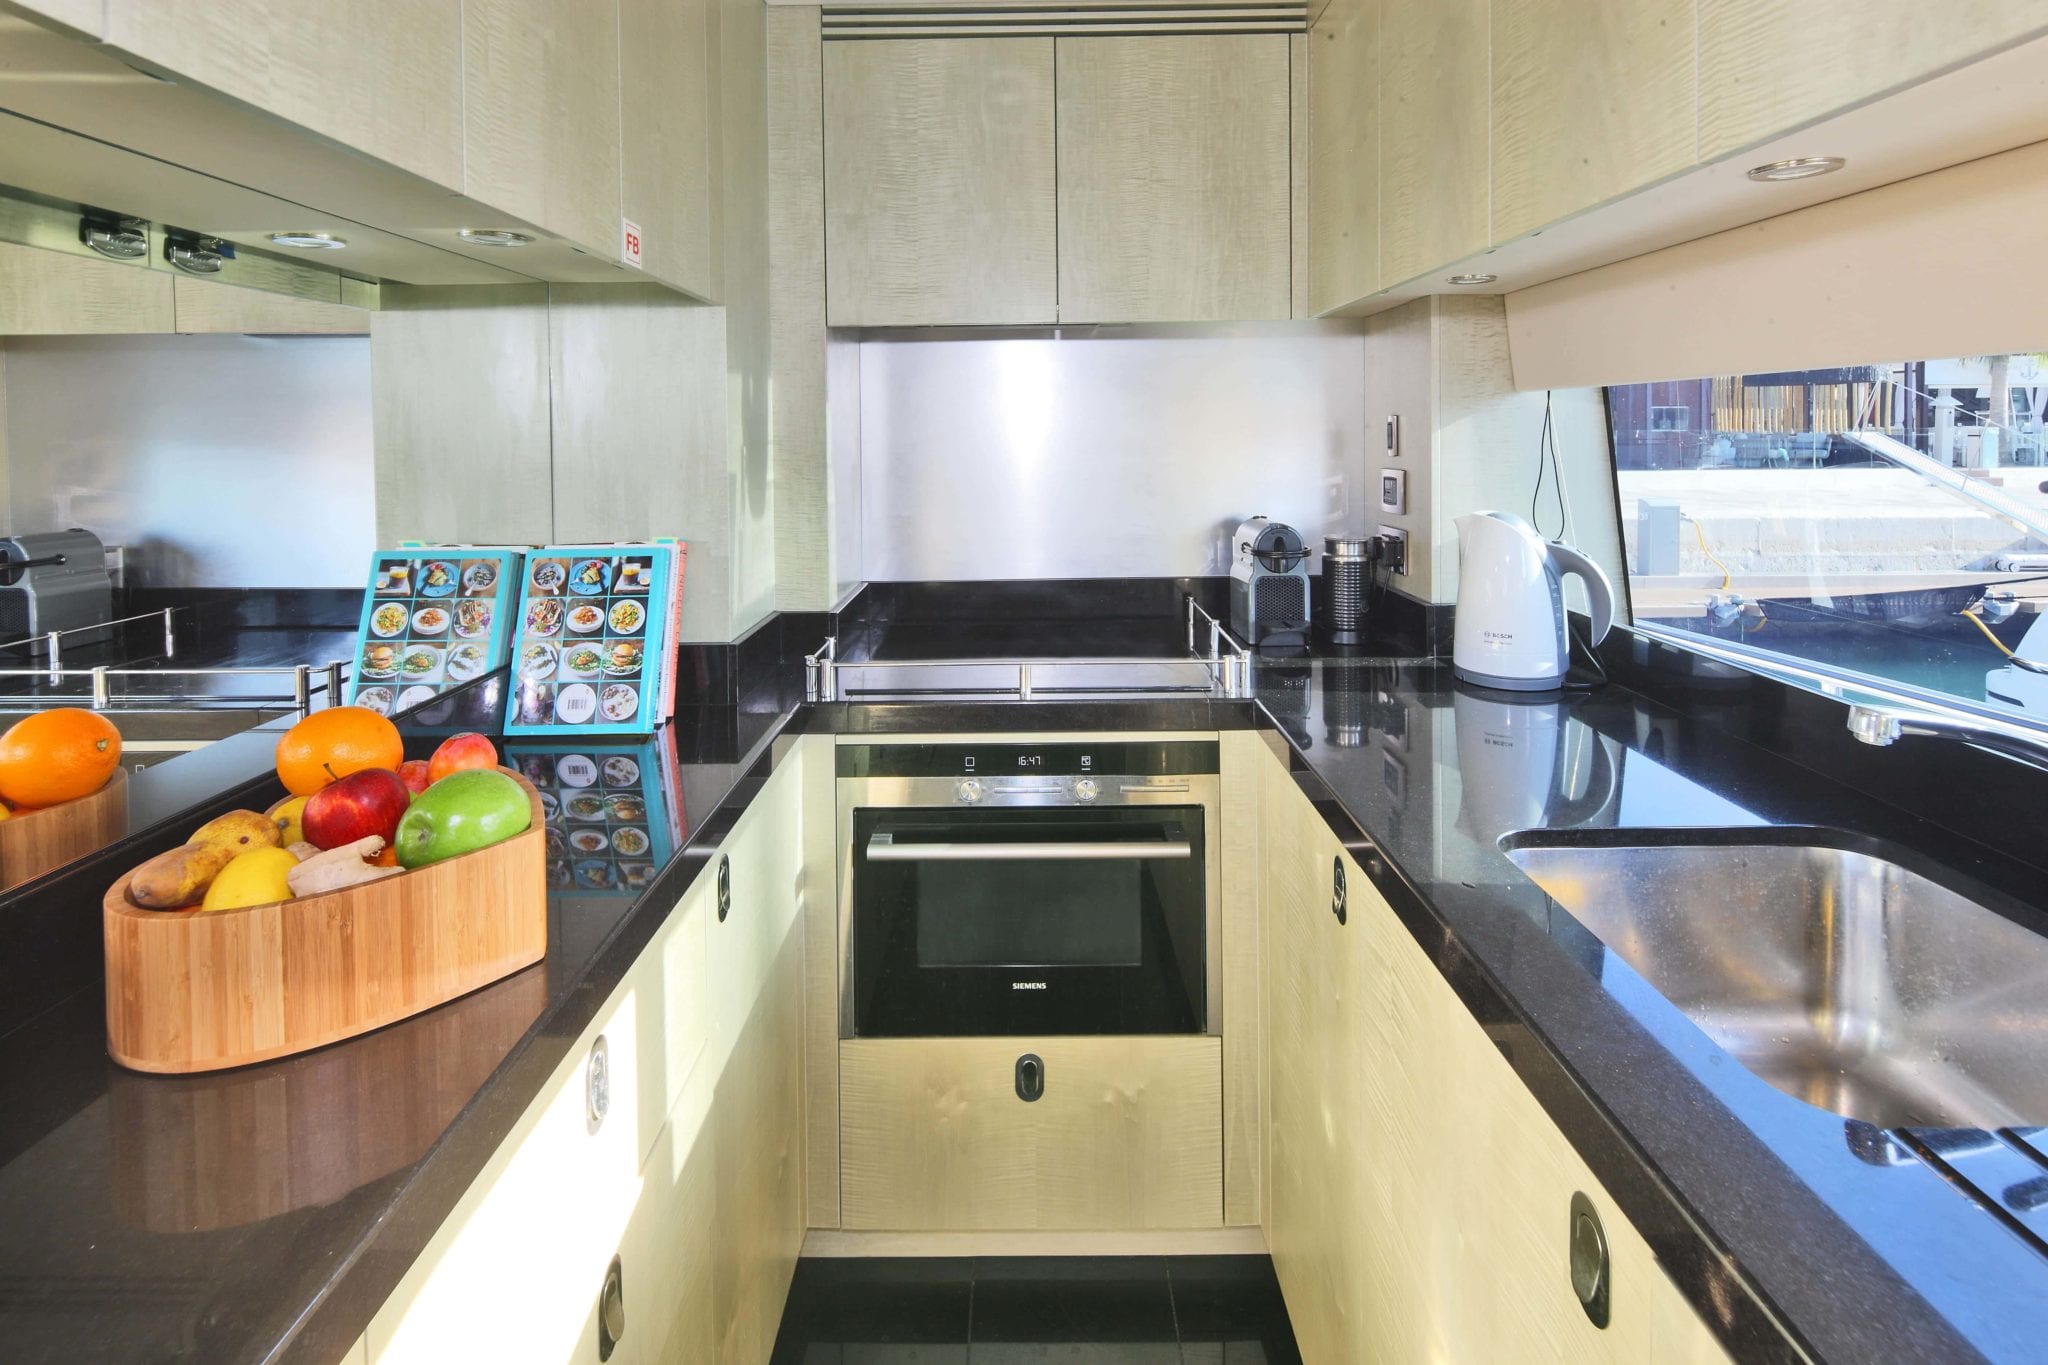 Explore the kitchen inside the luxury sunseeker yacht.